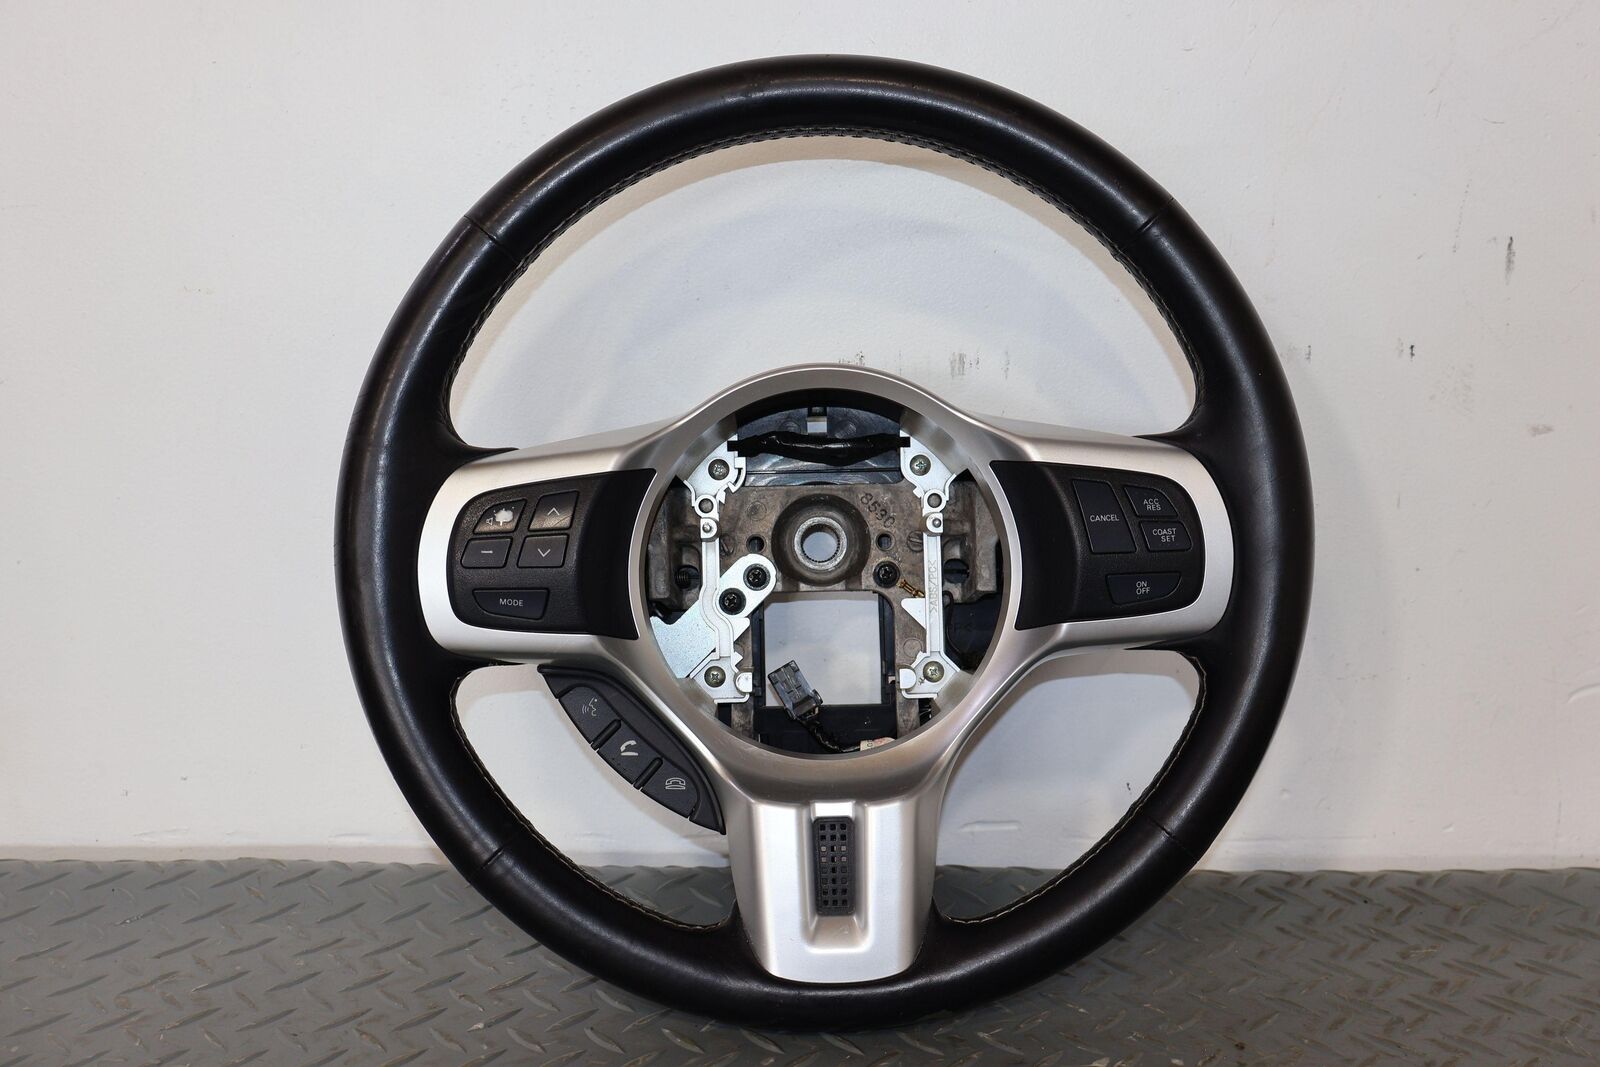 2008 Mitsubishi Lancer EVO X MR OEM Leather Steering Wheel (Black) Mild Wear